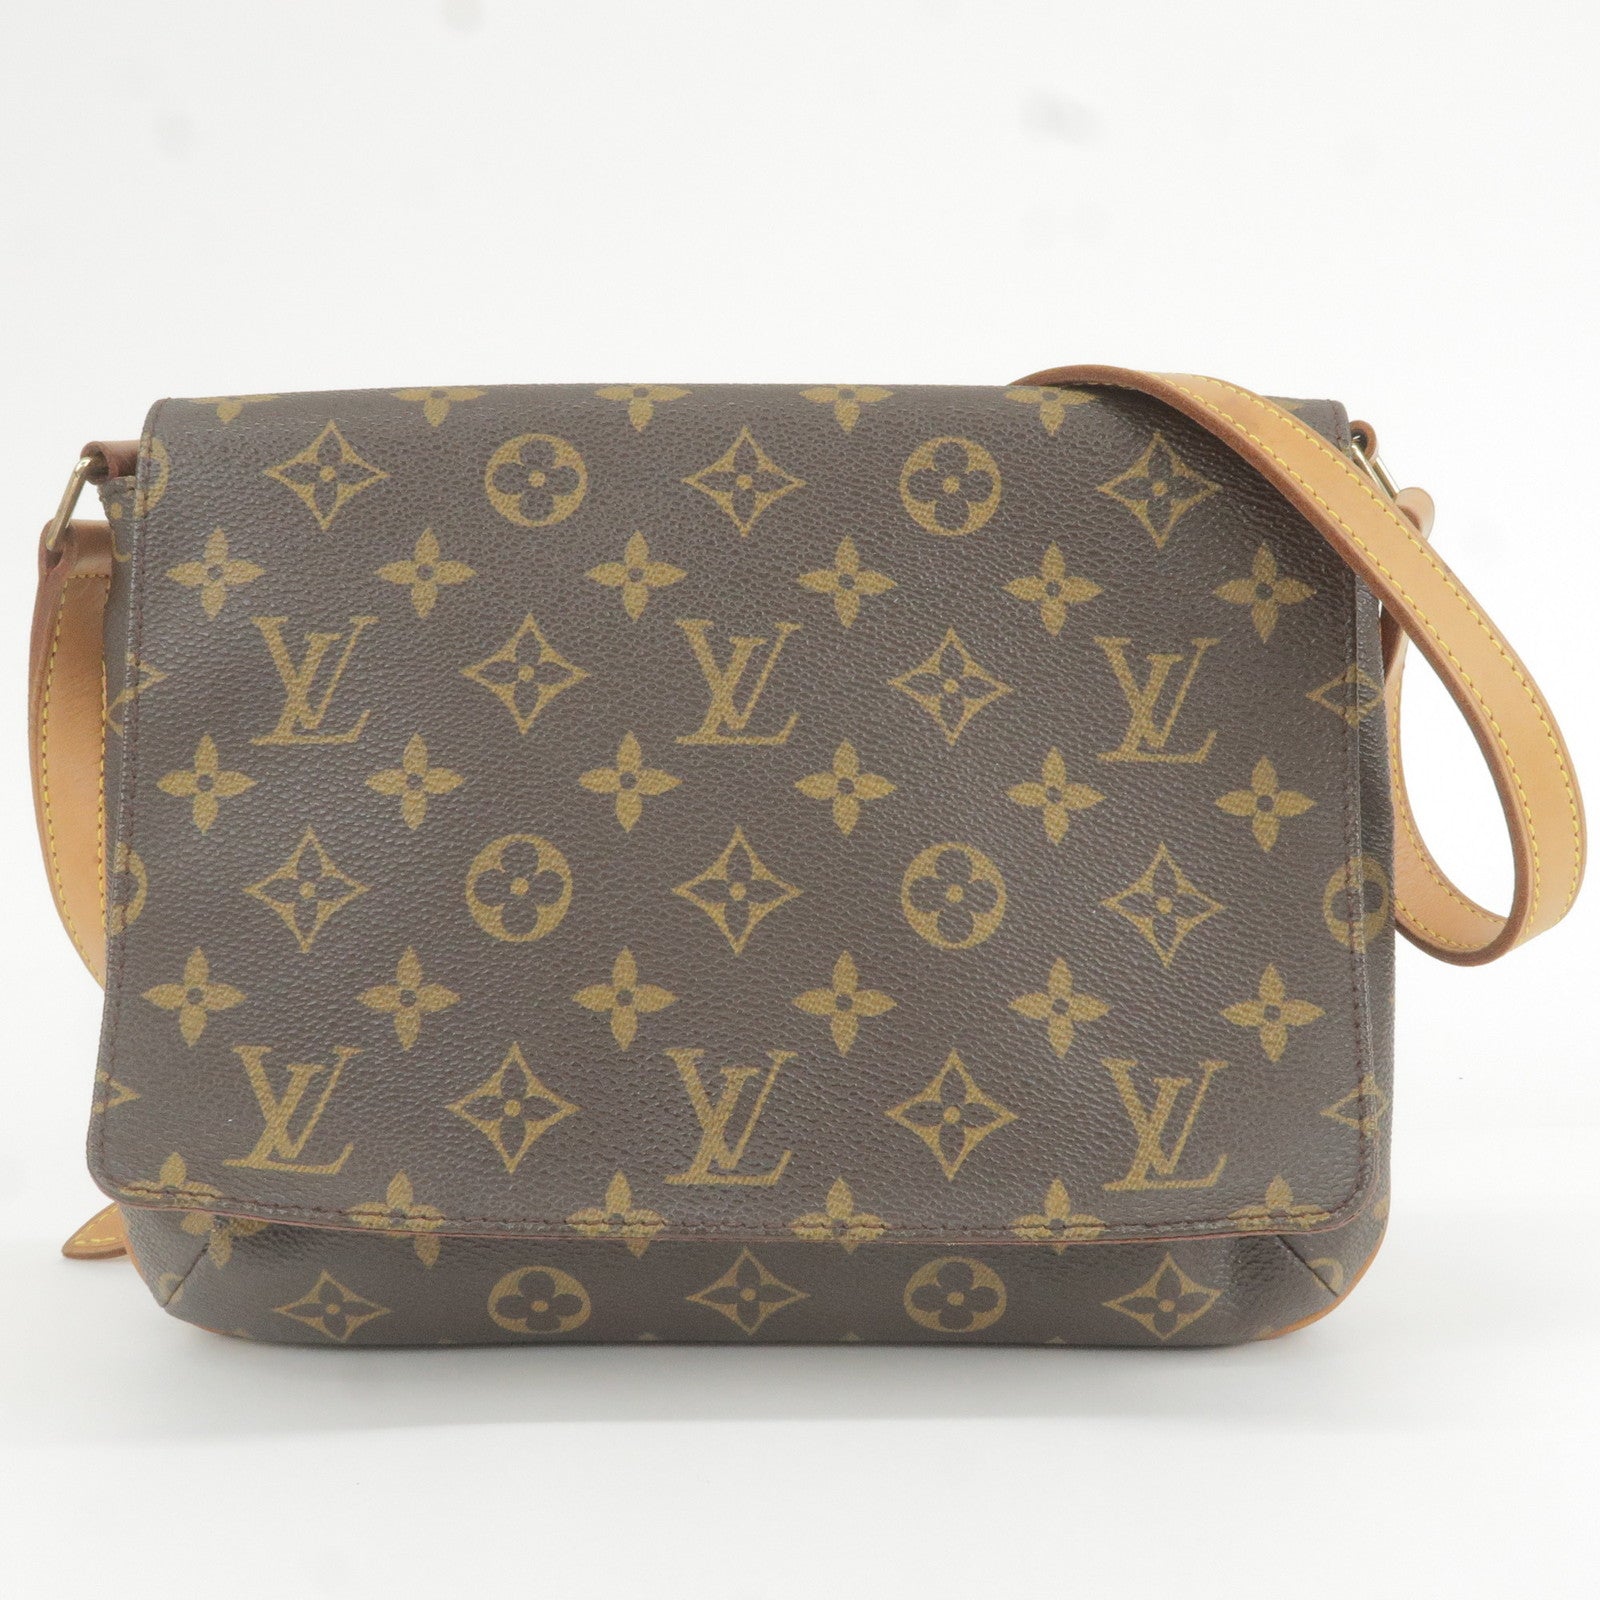 Vintage Louis Vuitton Monogram Printed Leather Small Shoulder Bag